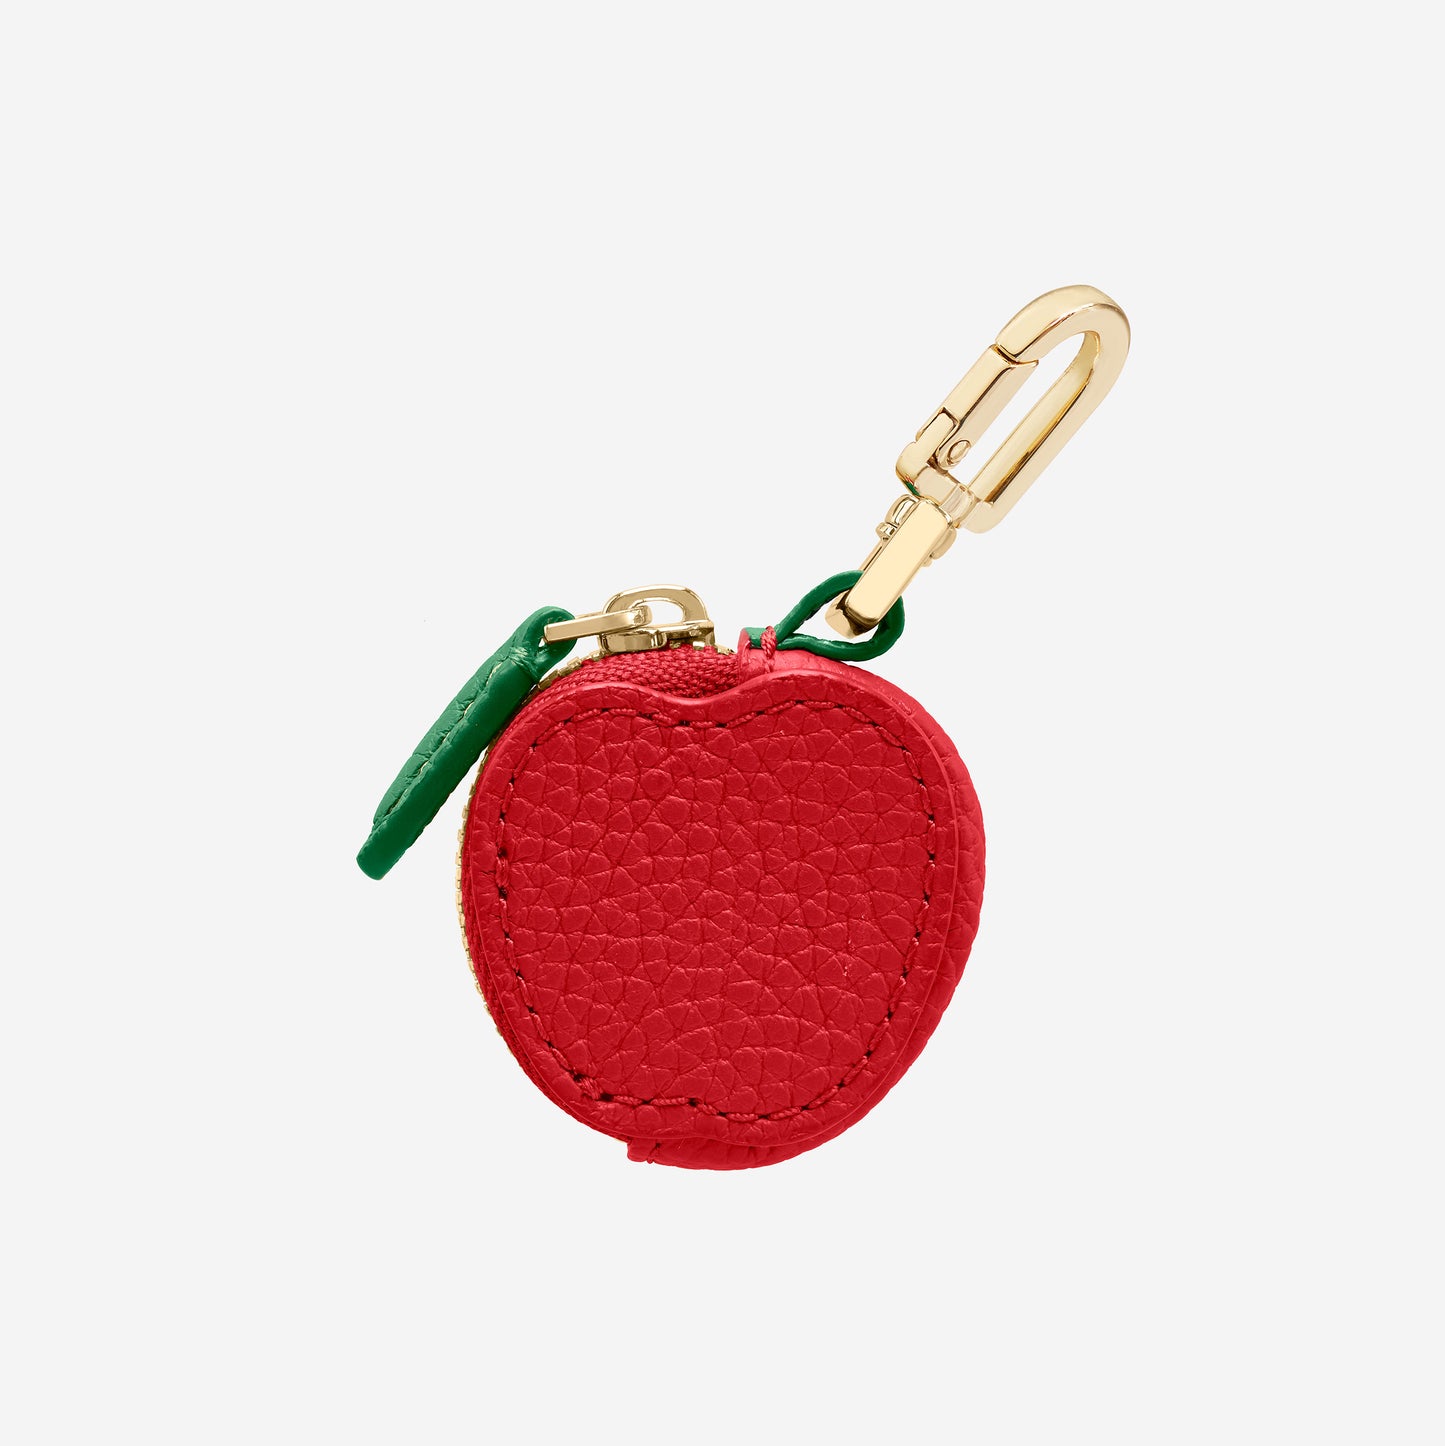 The SABRÉMOJI™ Fruit Charm - Apple